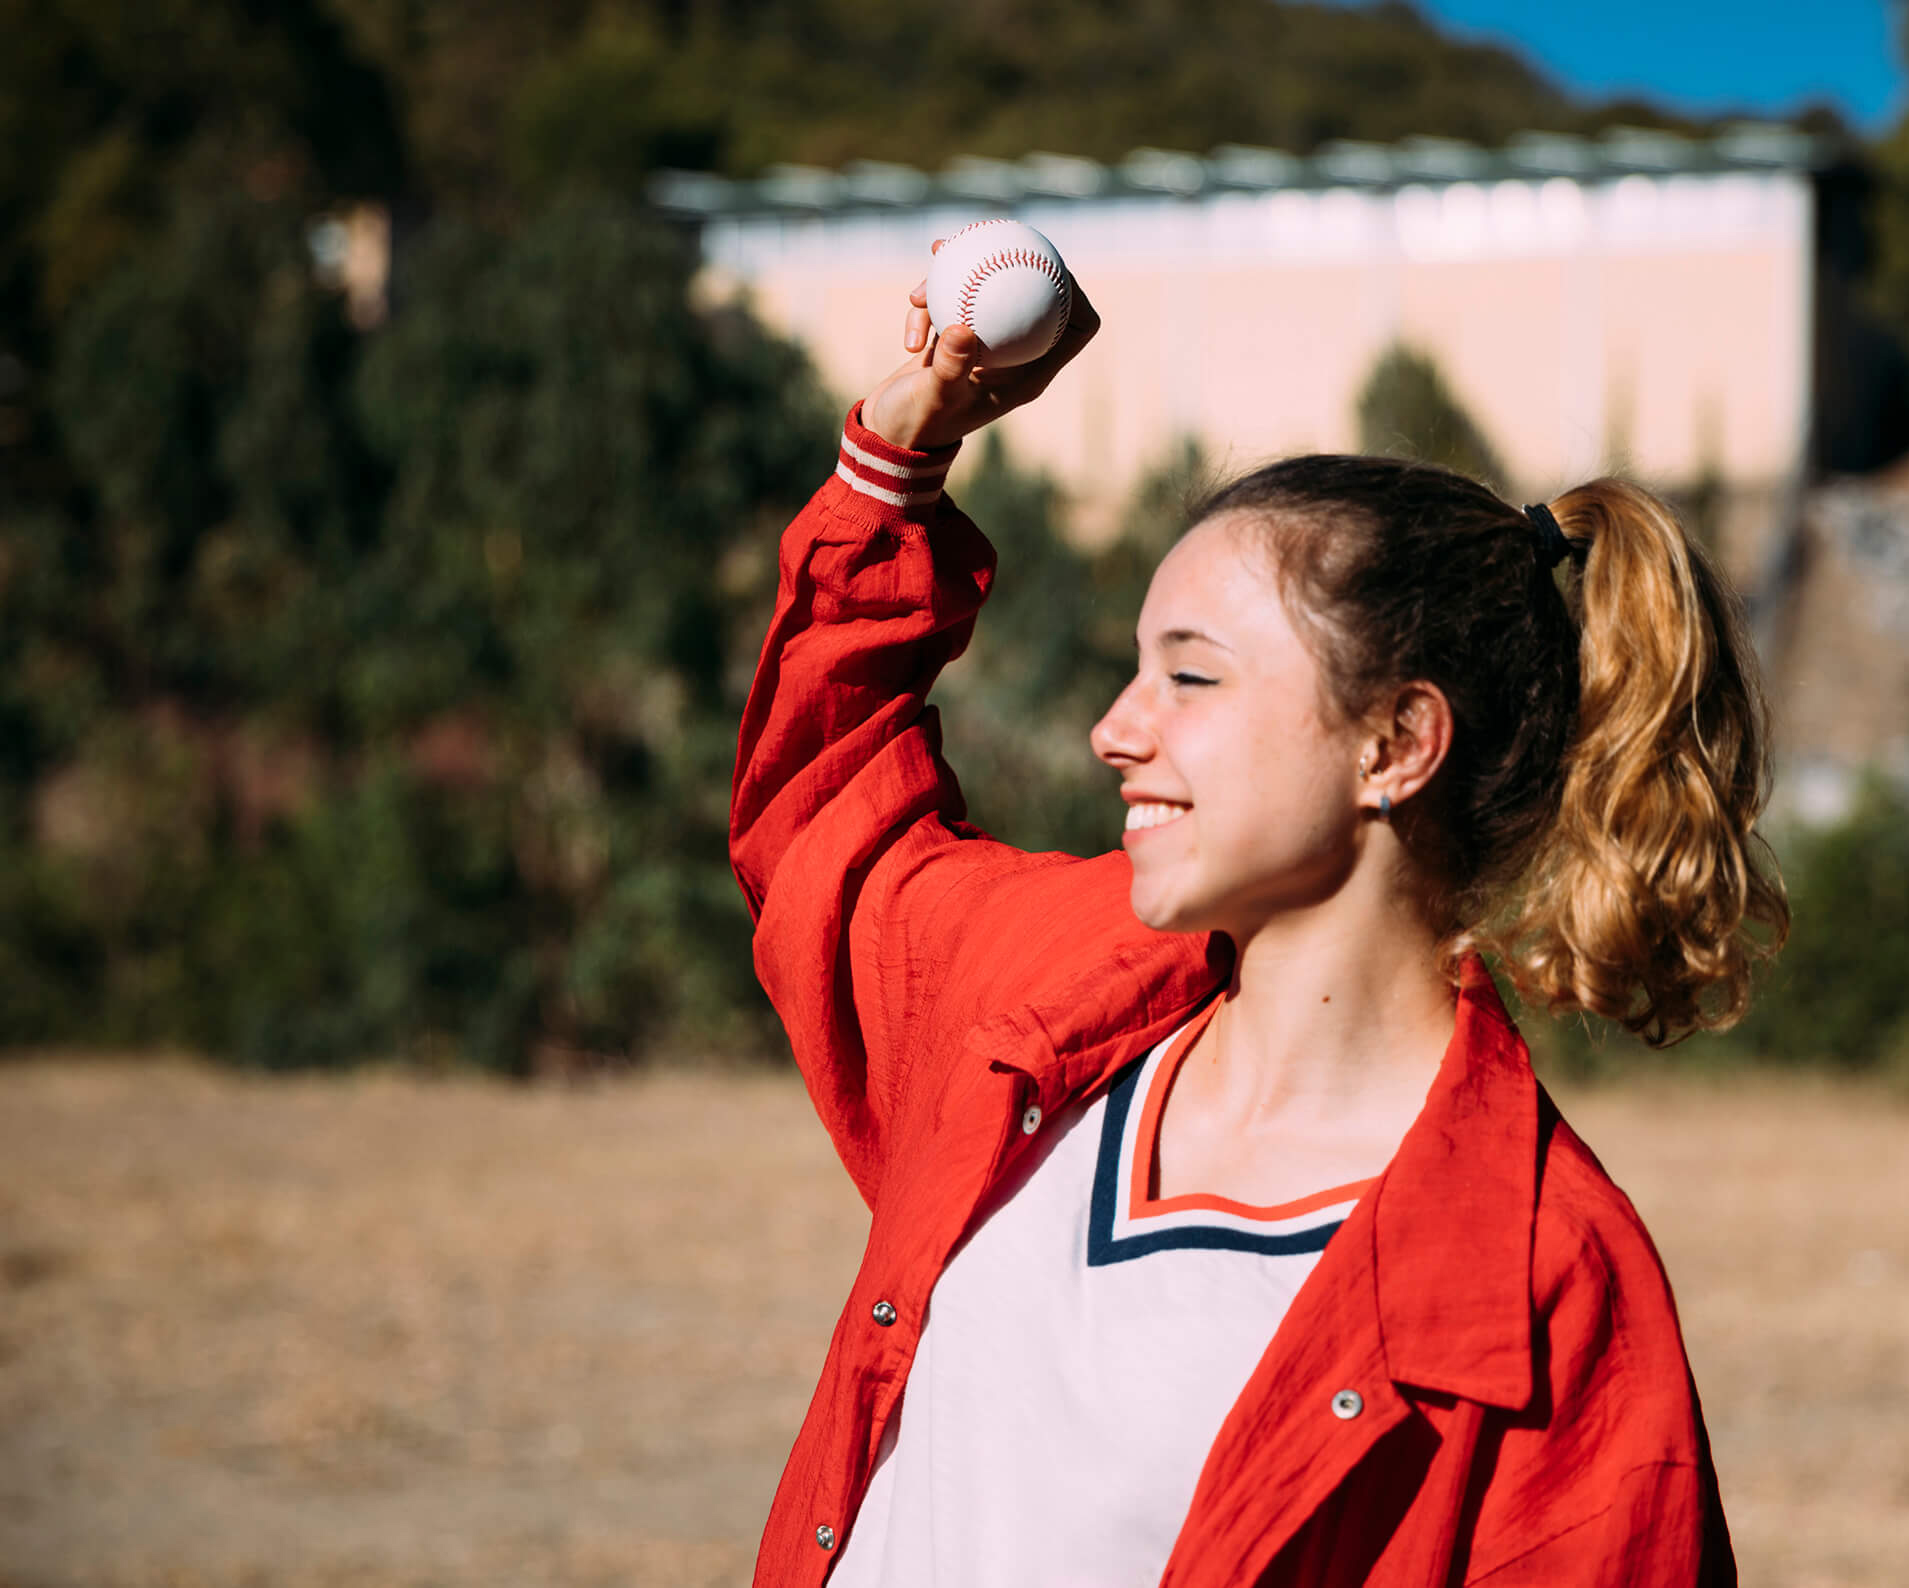 teen girl throwing a baseball